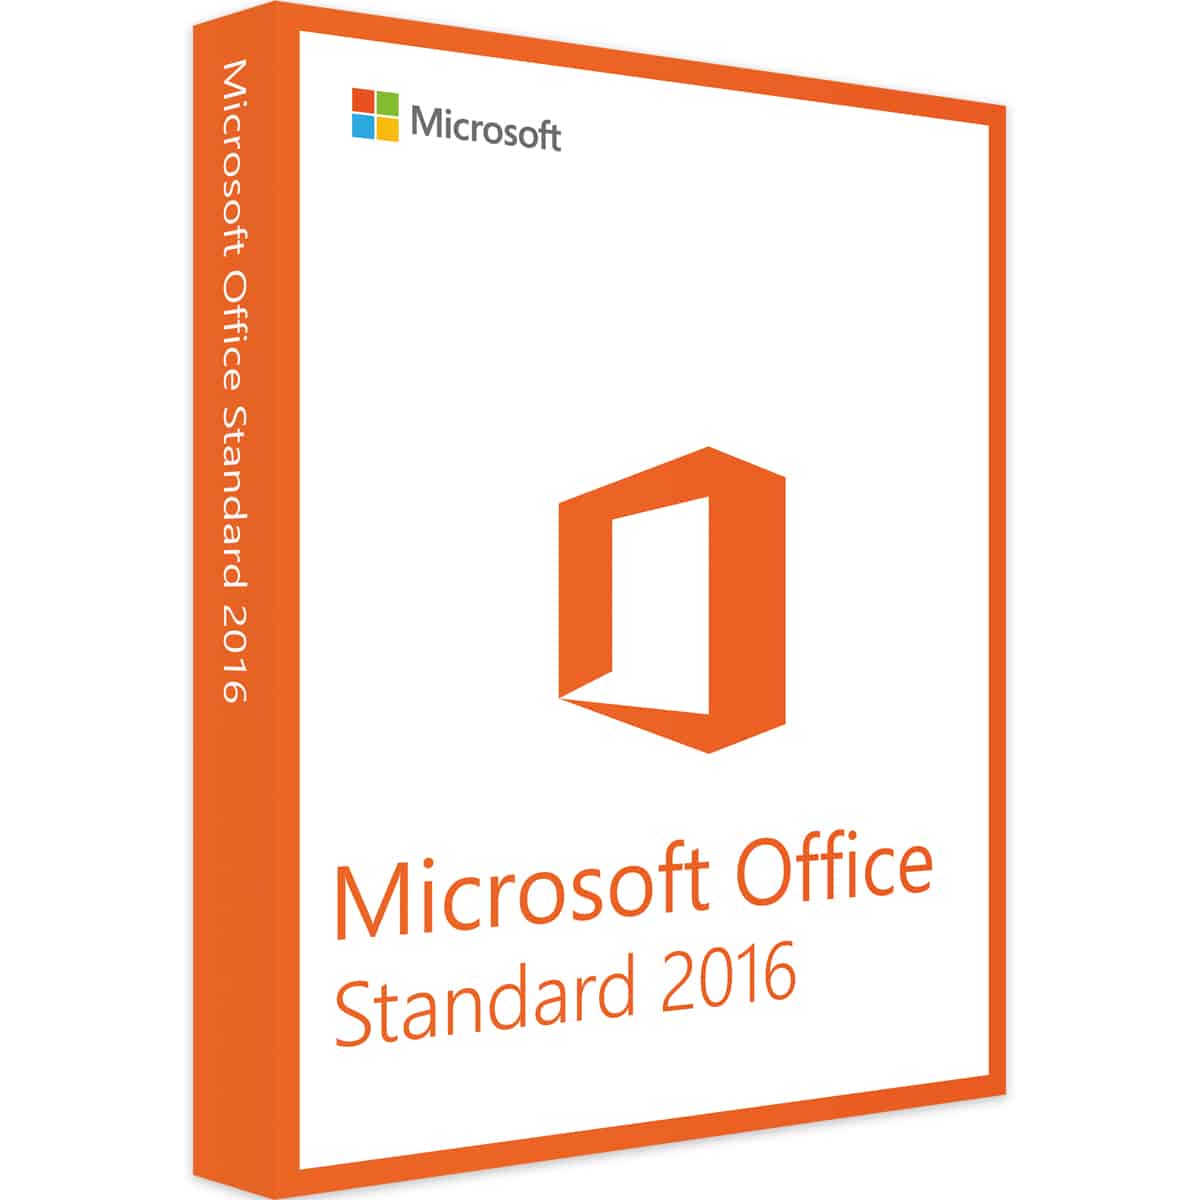 Microsoft Office 2016 Standard Activation Key